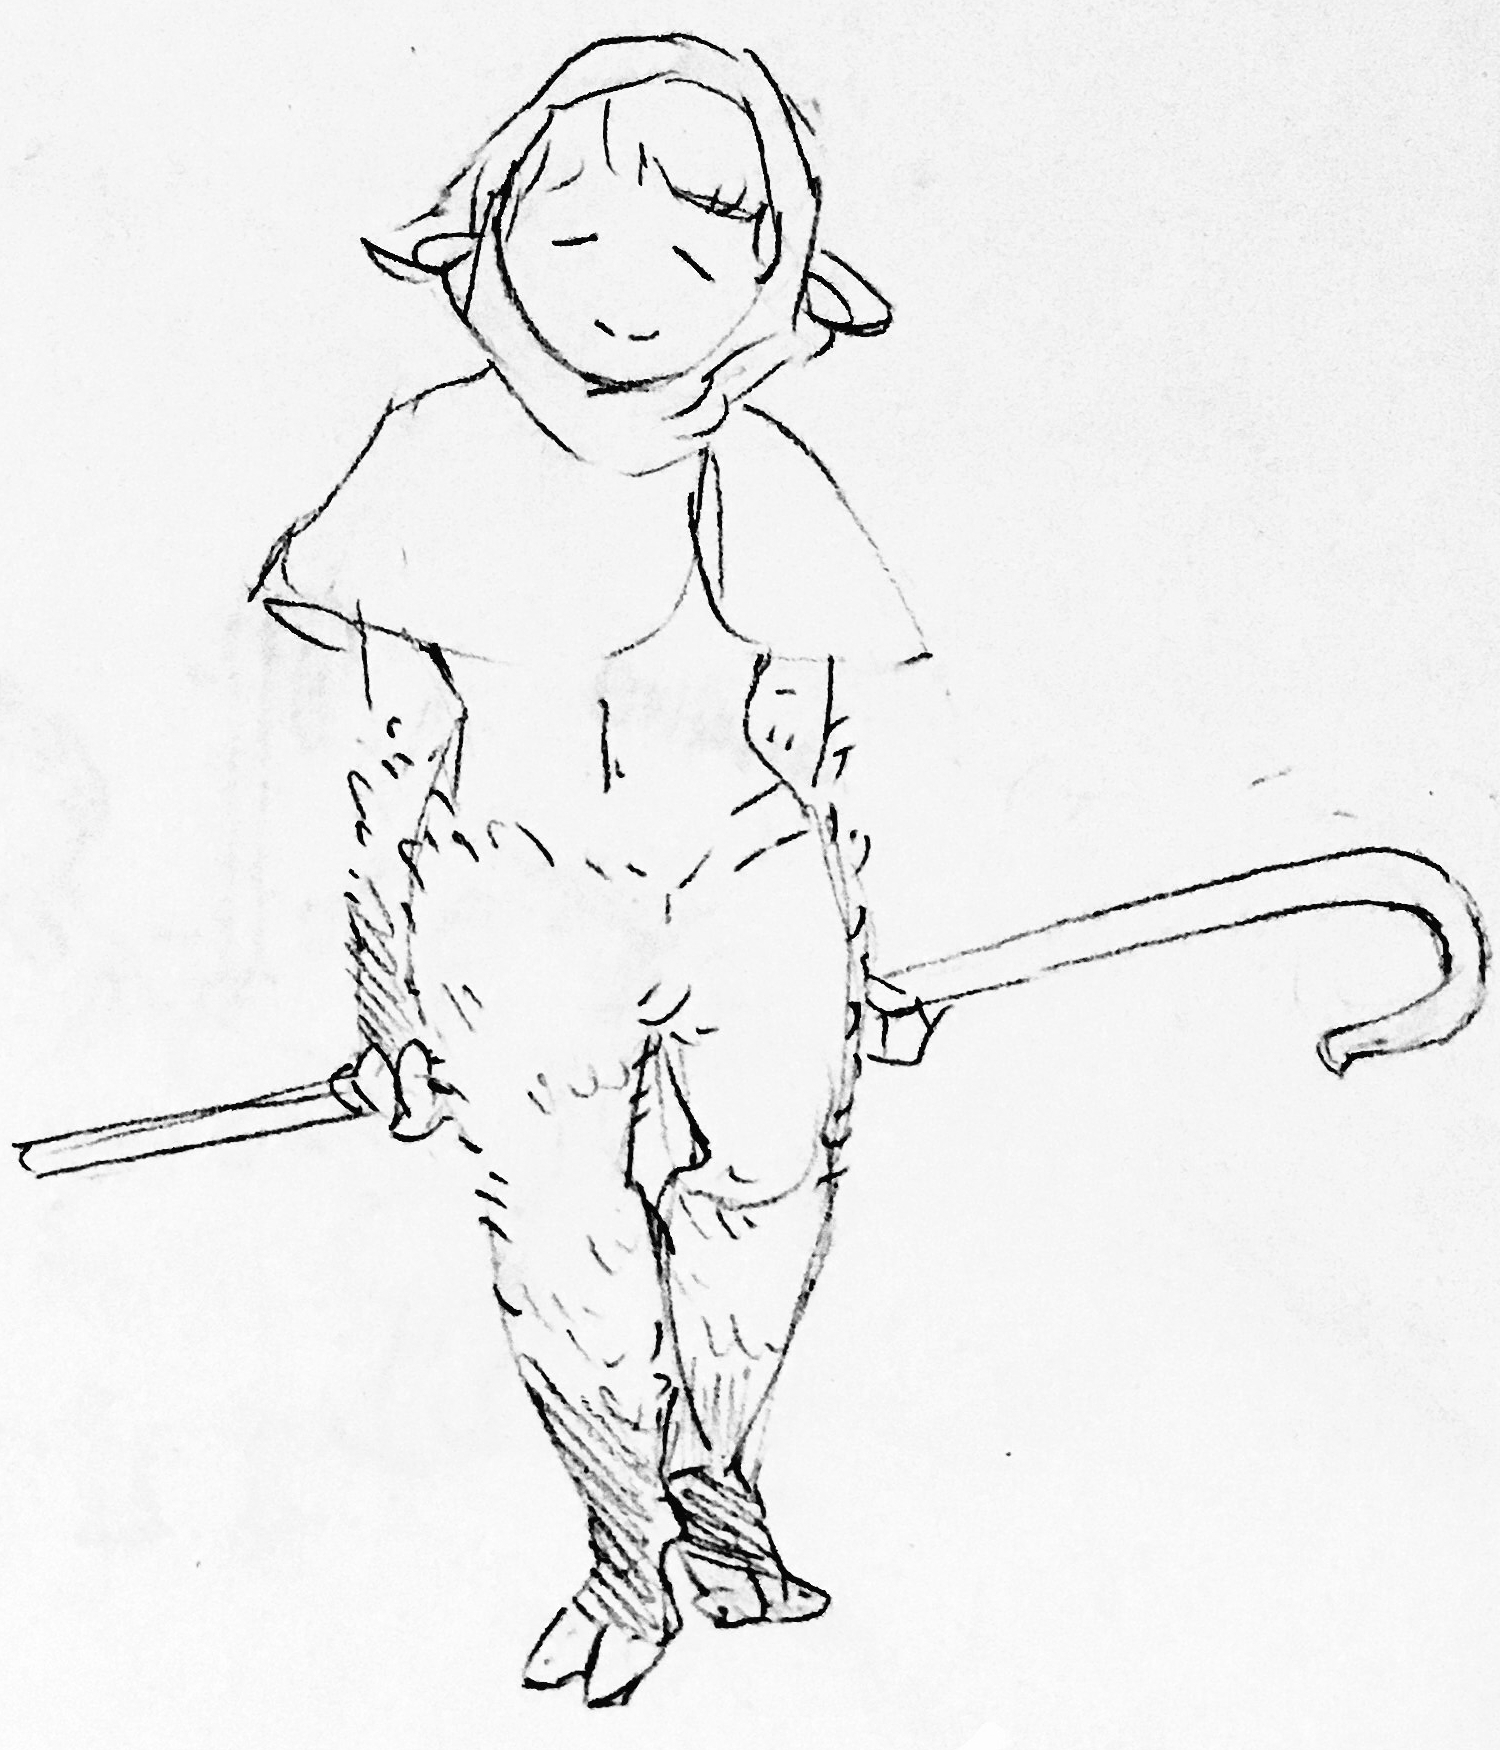 batya holding a shepherd's crook behind her back